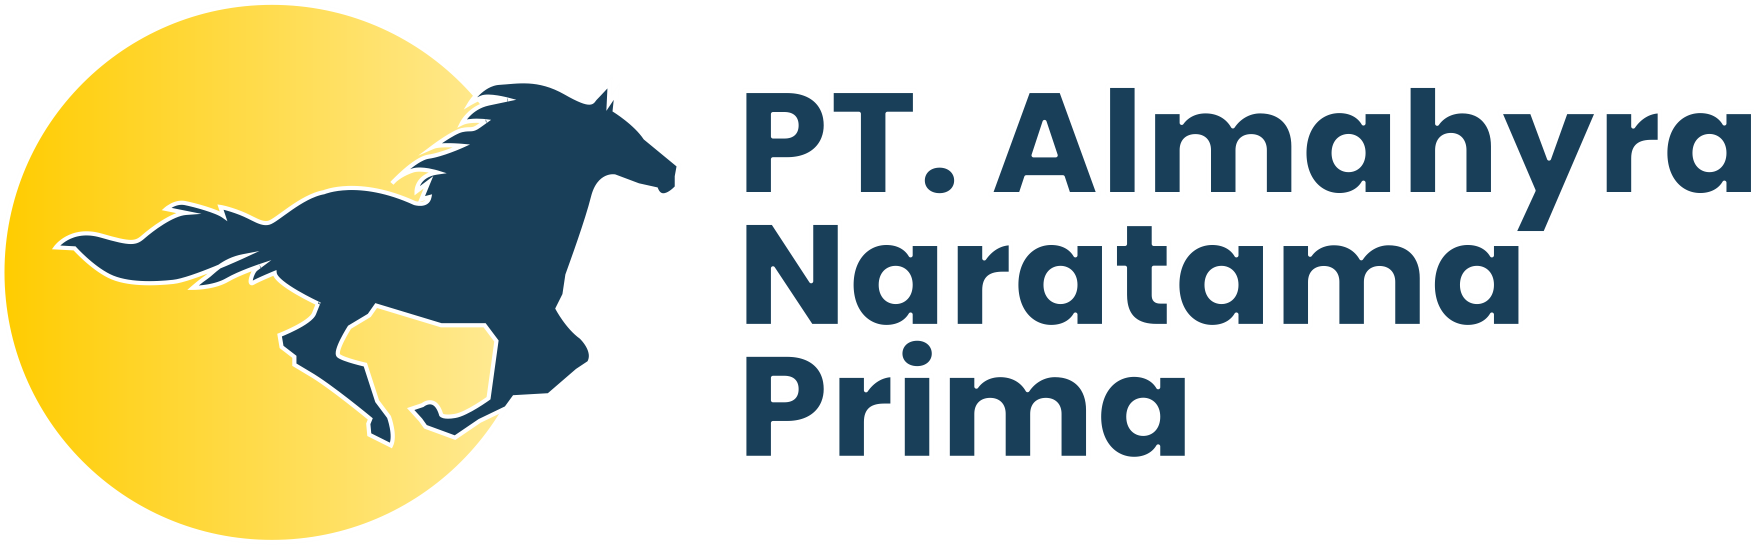 Almahyra Naratama Prima Logo